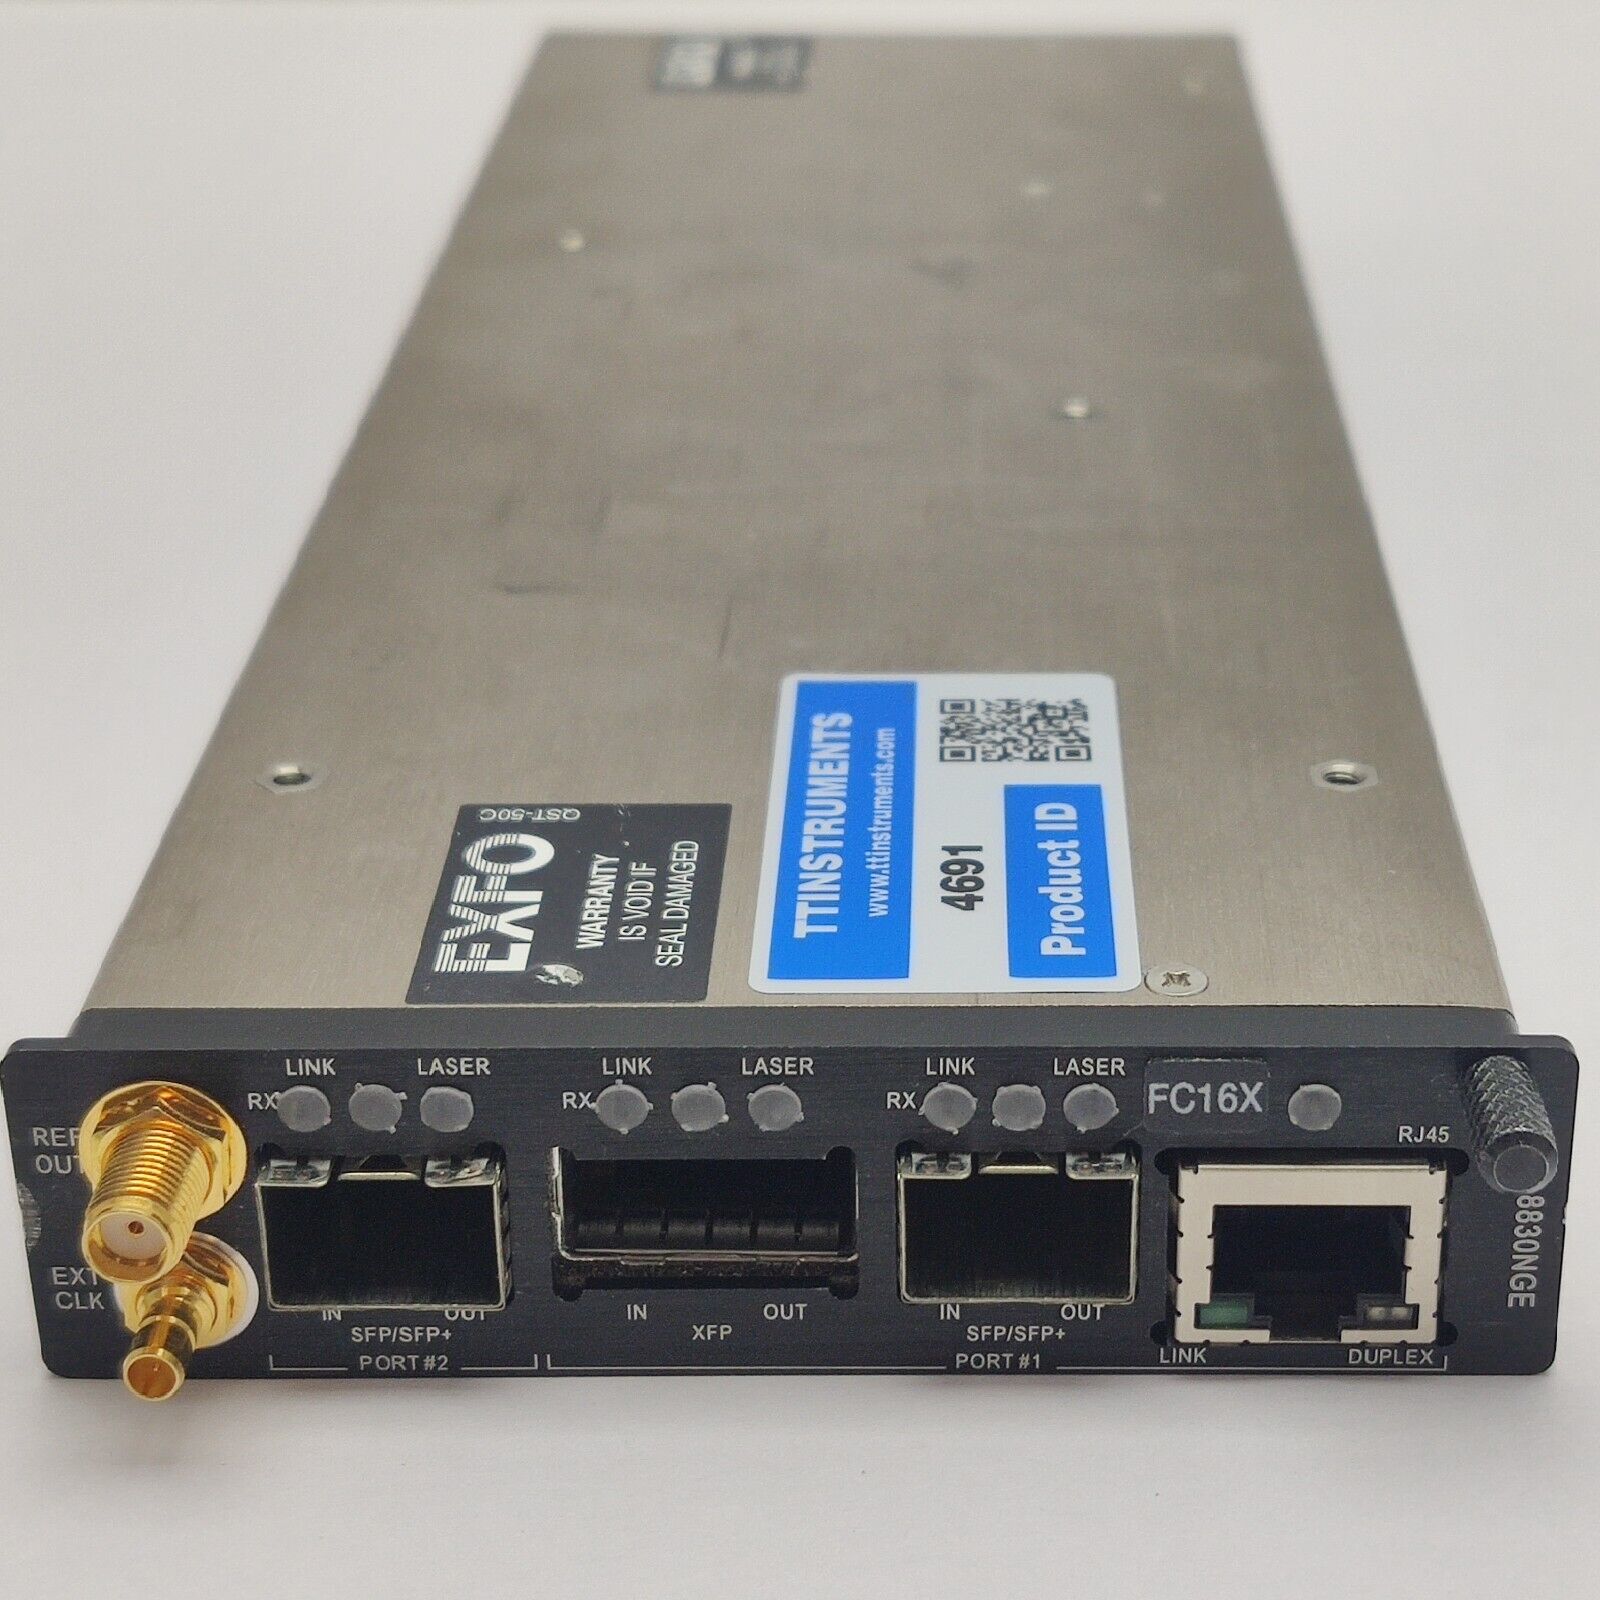 EXFO FTB-8830NGE-16X 10G LAN WAN GigE Optical Electrical Ethernet Network Tester